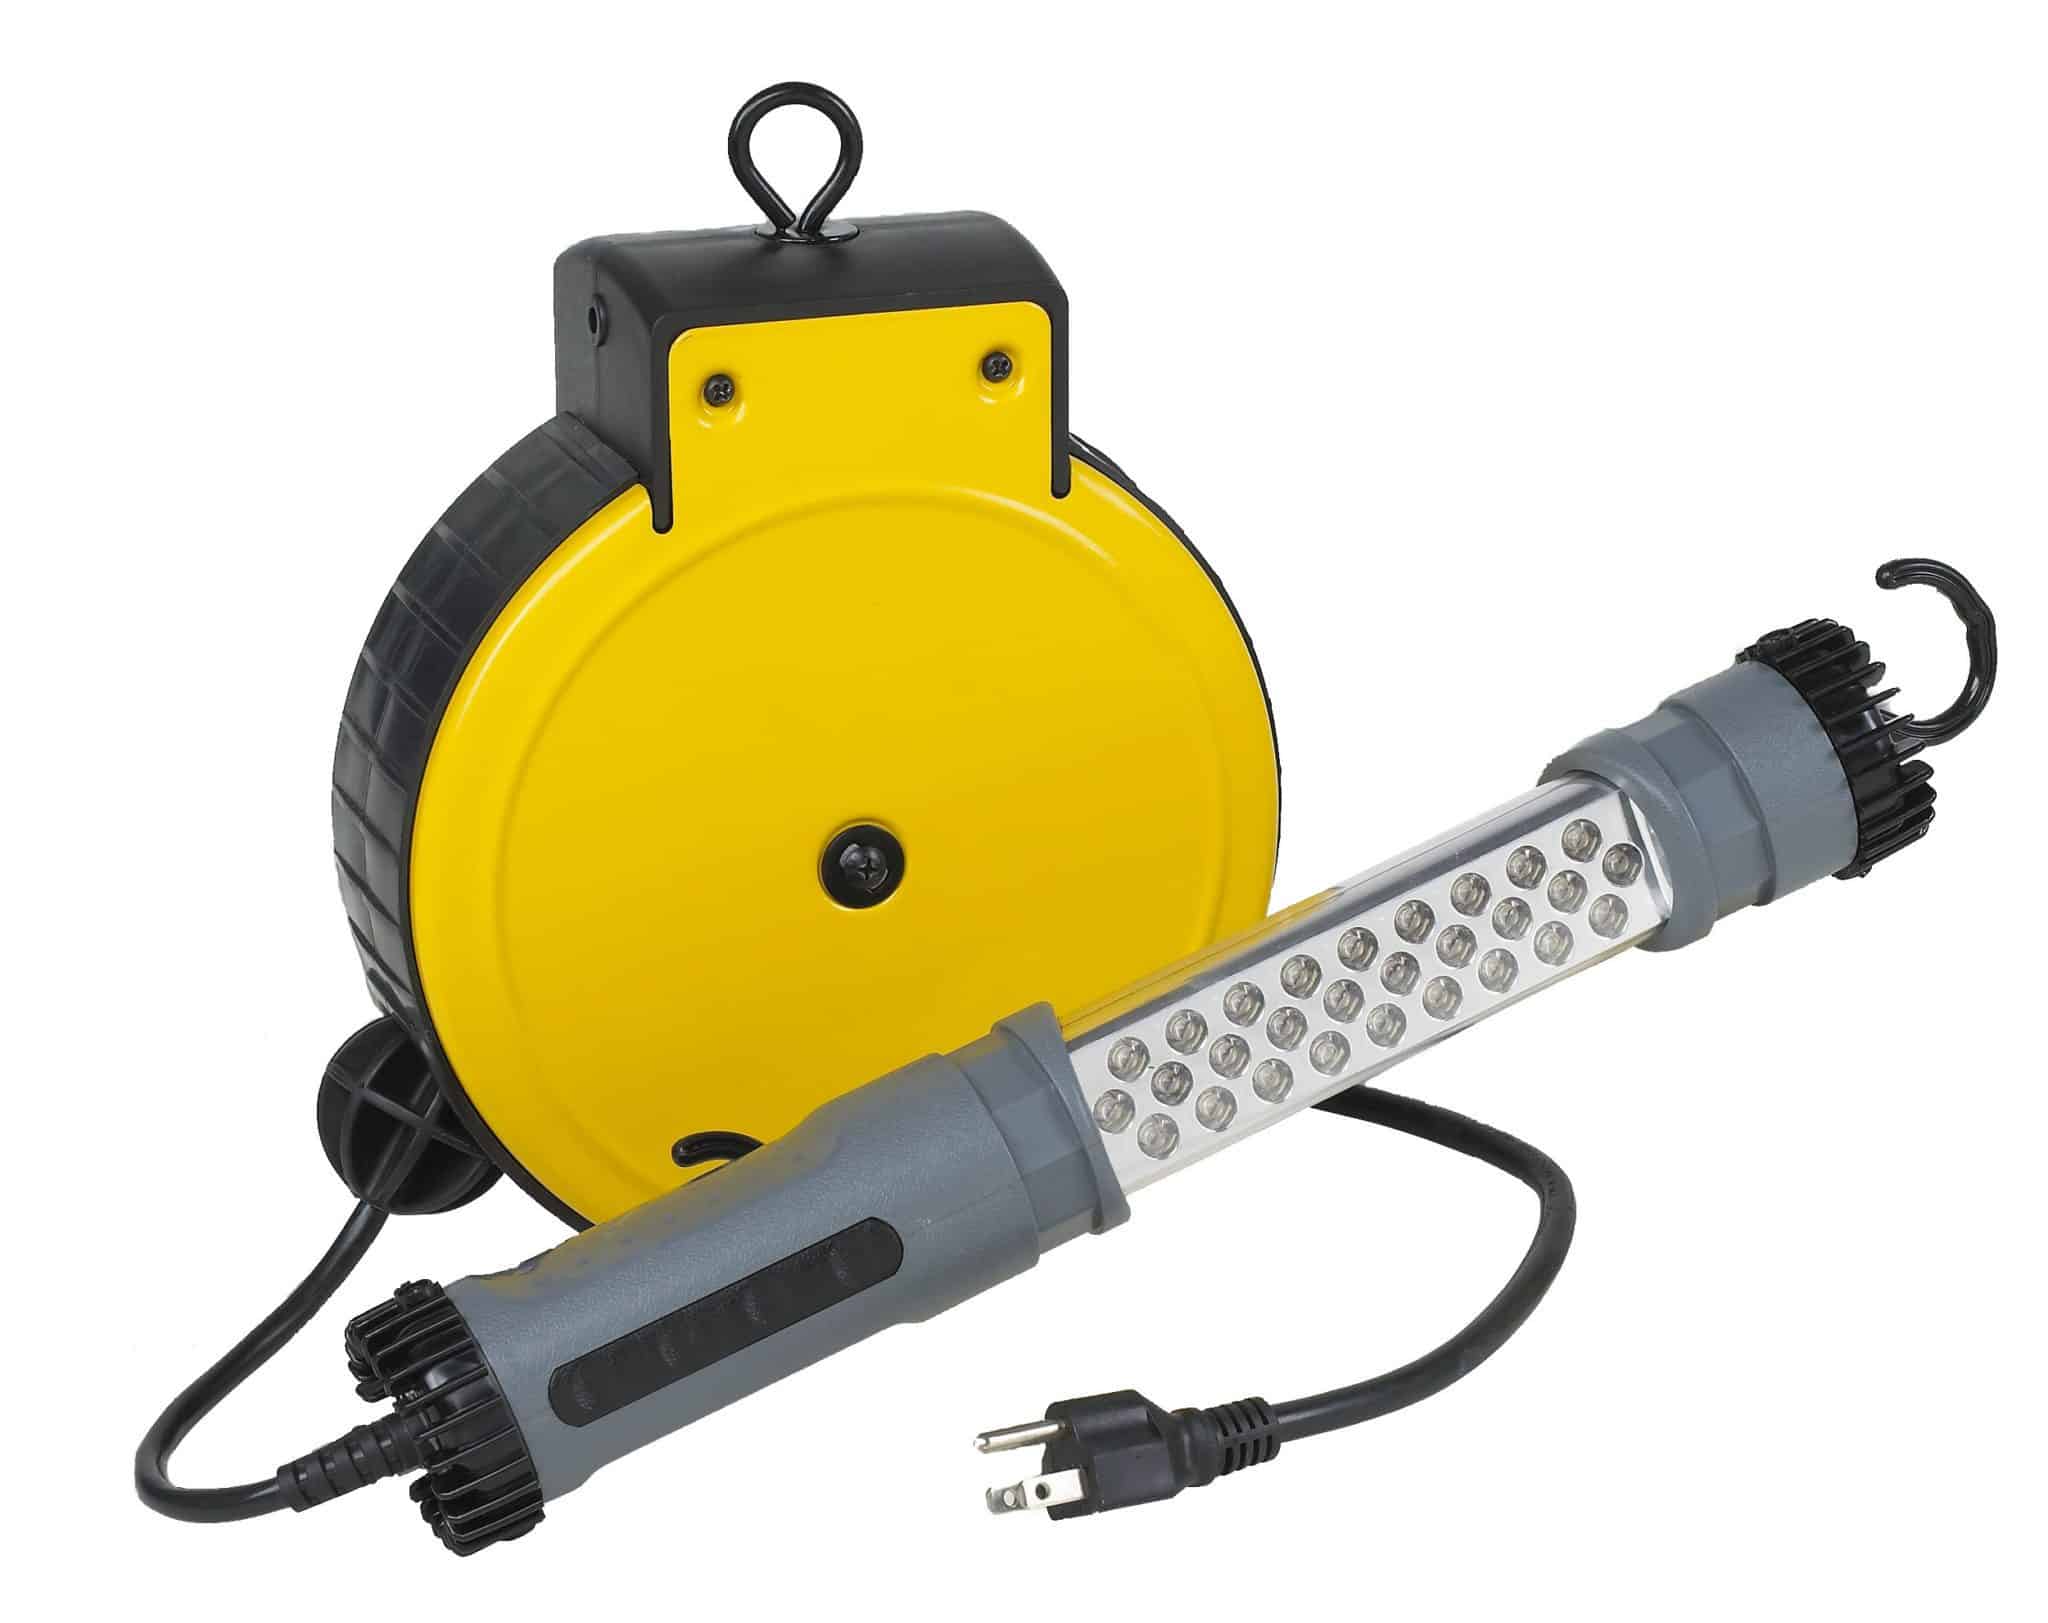 Alert ProReel 5030AM Retractable Cord Reel w/LED Work Light | 30' - 16/3  SJTOW Task Light Cord | 14W LED Shop Light Provides 1500 Lumens | Grounded